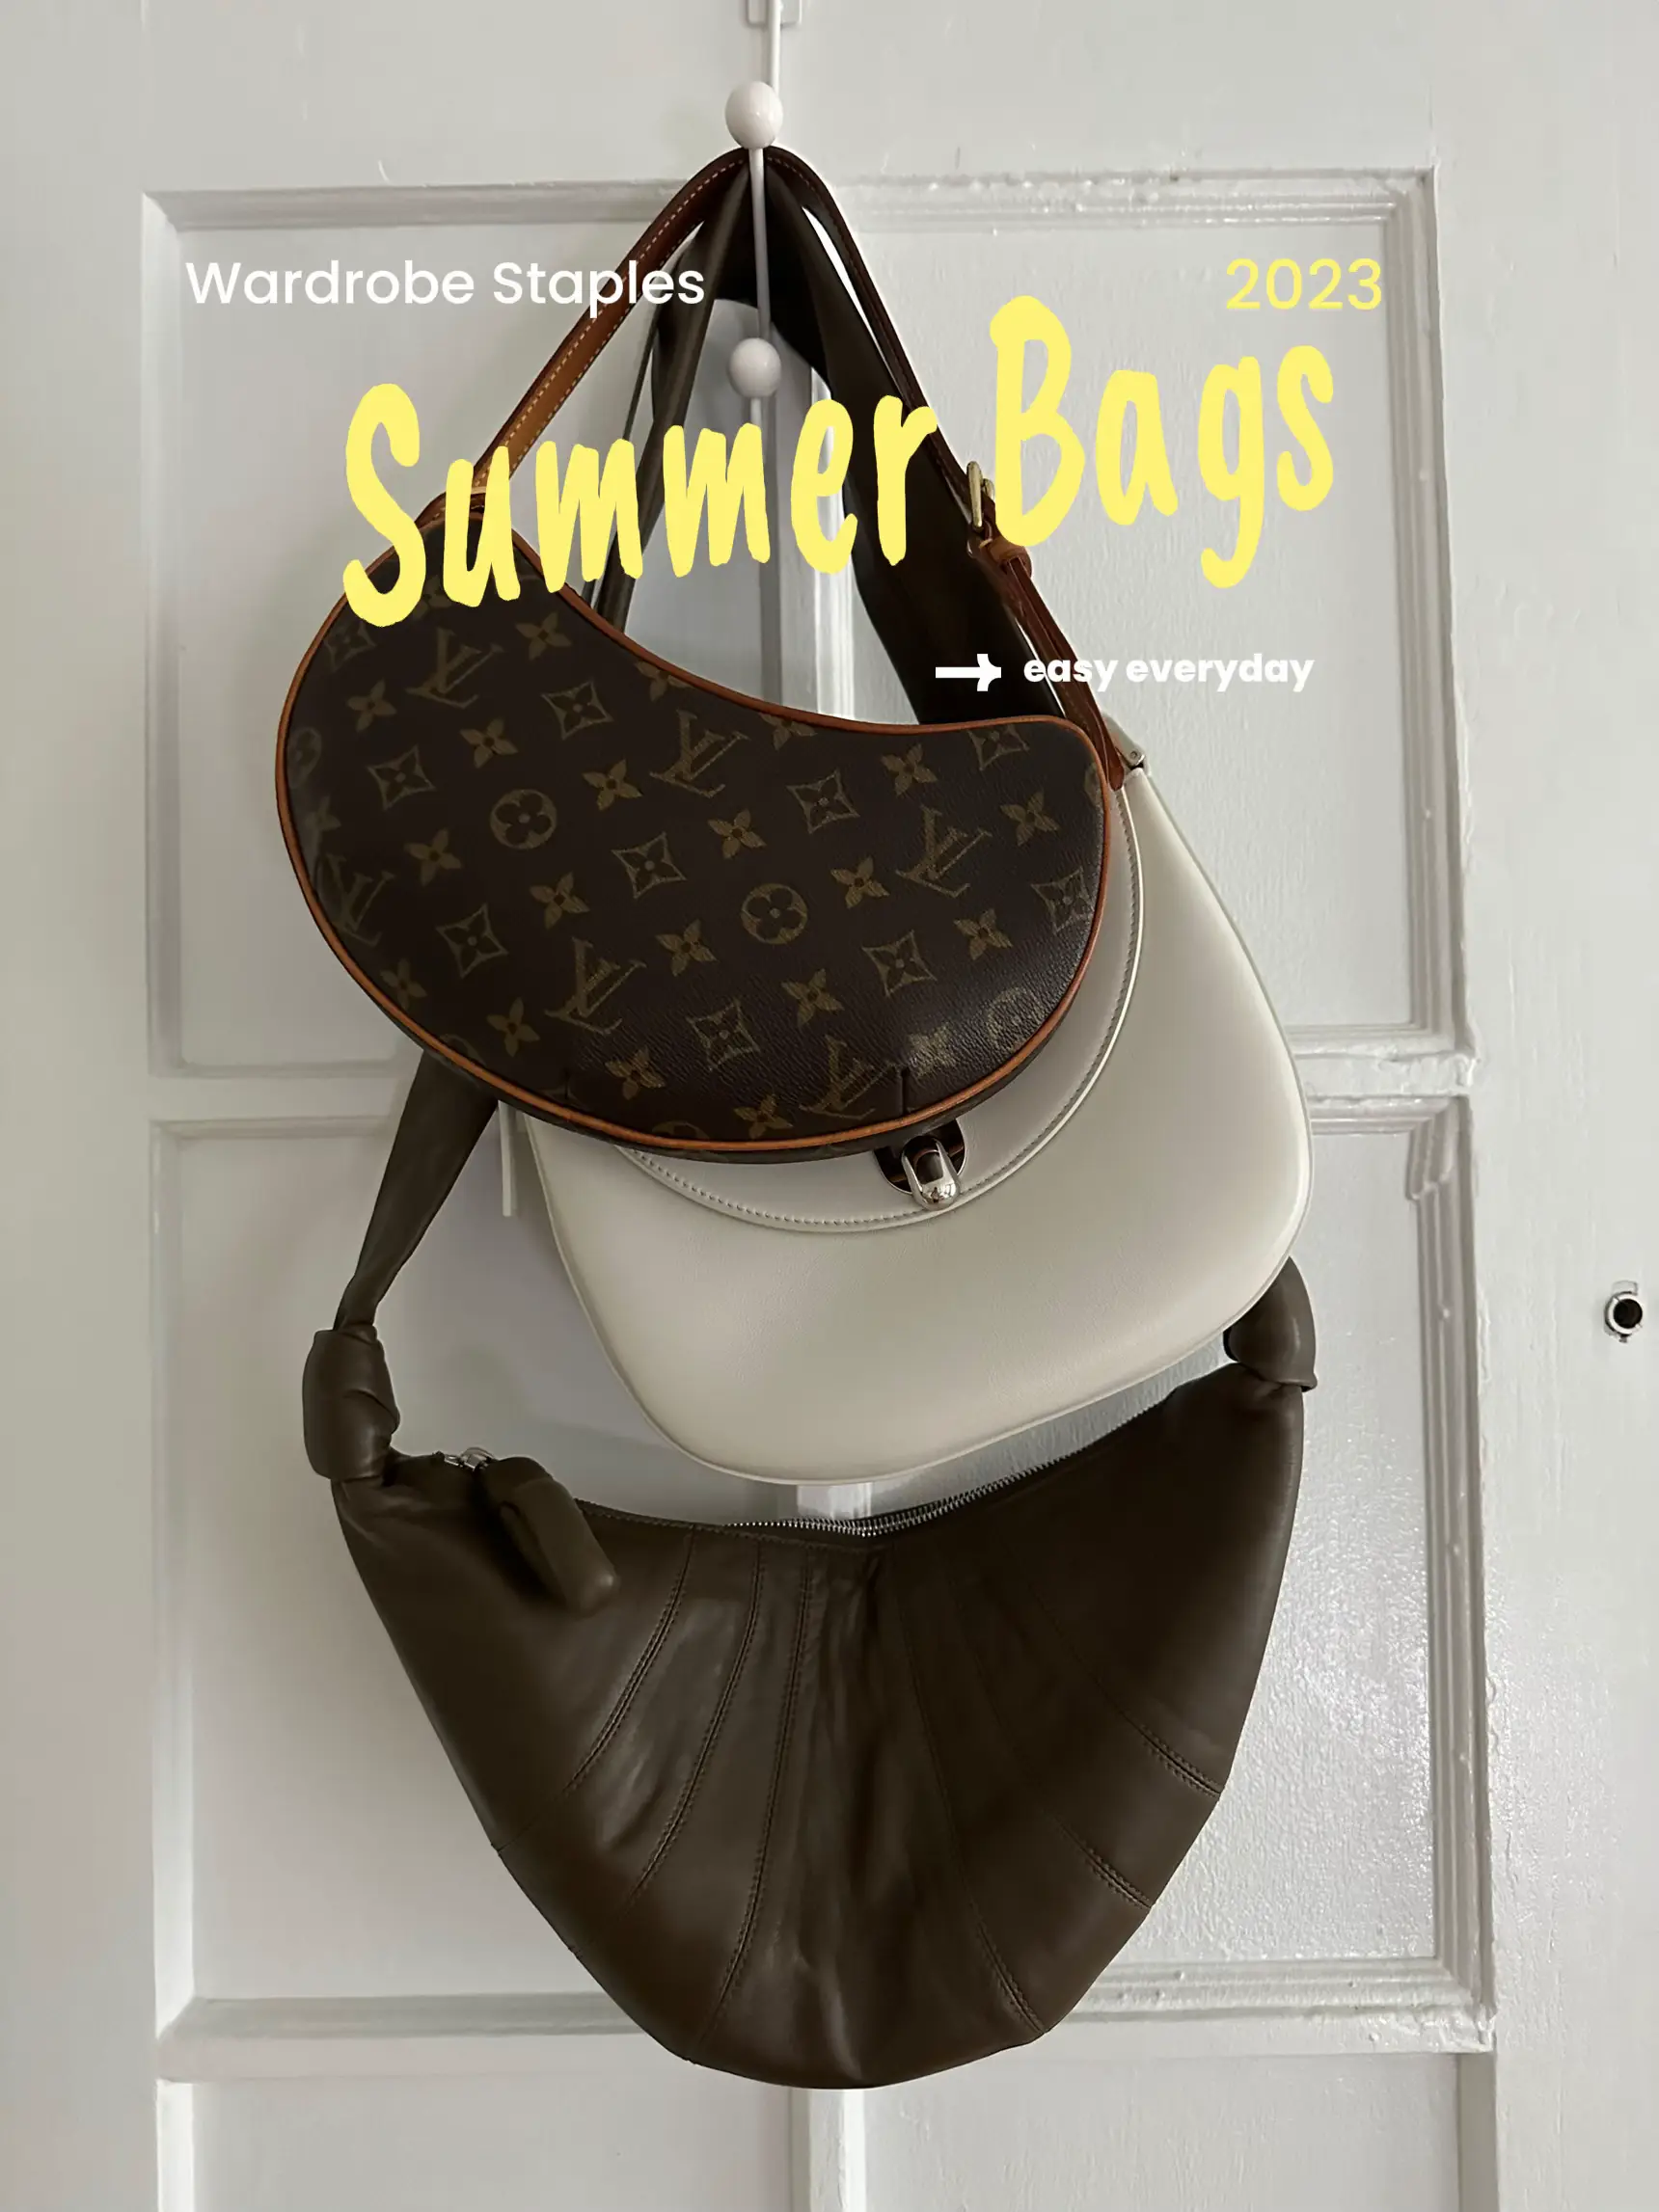 Louis Vuitton Spring Bag Wishlist 2023  Bags I'm Eyeing for the Season! 